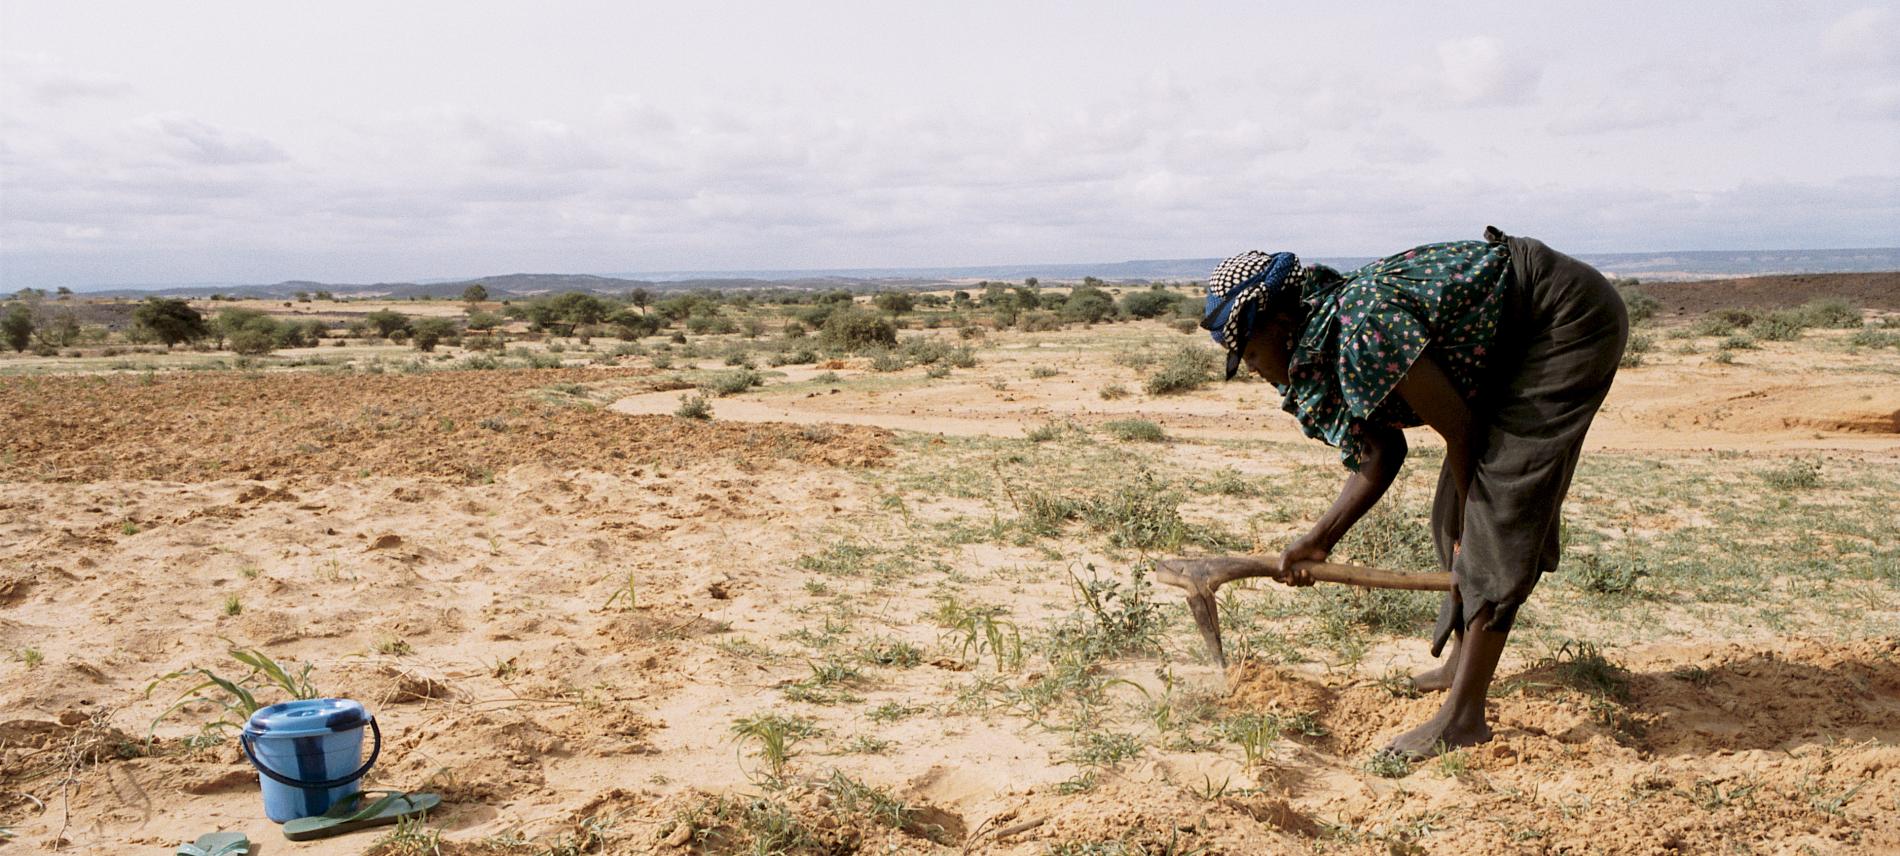 Frau arbeitet auf verdorrtem Feld in Niger. Foto: Isabelle Eshraghi